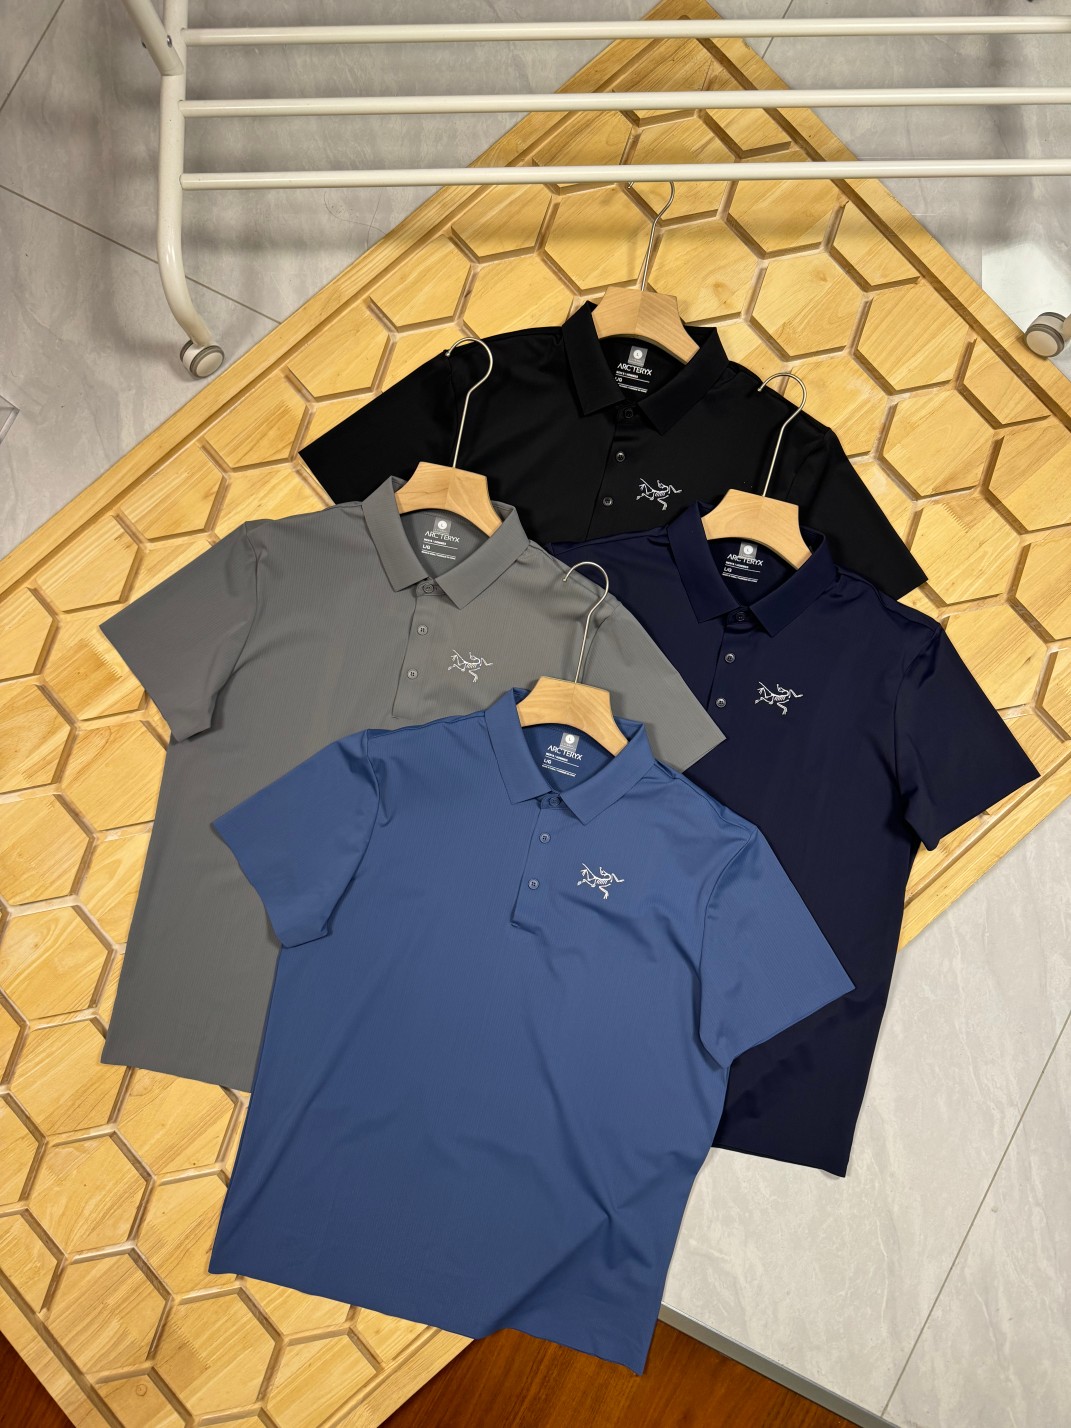 Arc’teryx Clothing Polo T-Shirt Black Blue Grey Embroidery Polyester Spandex Short Sleeve